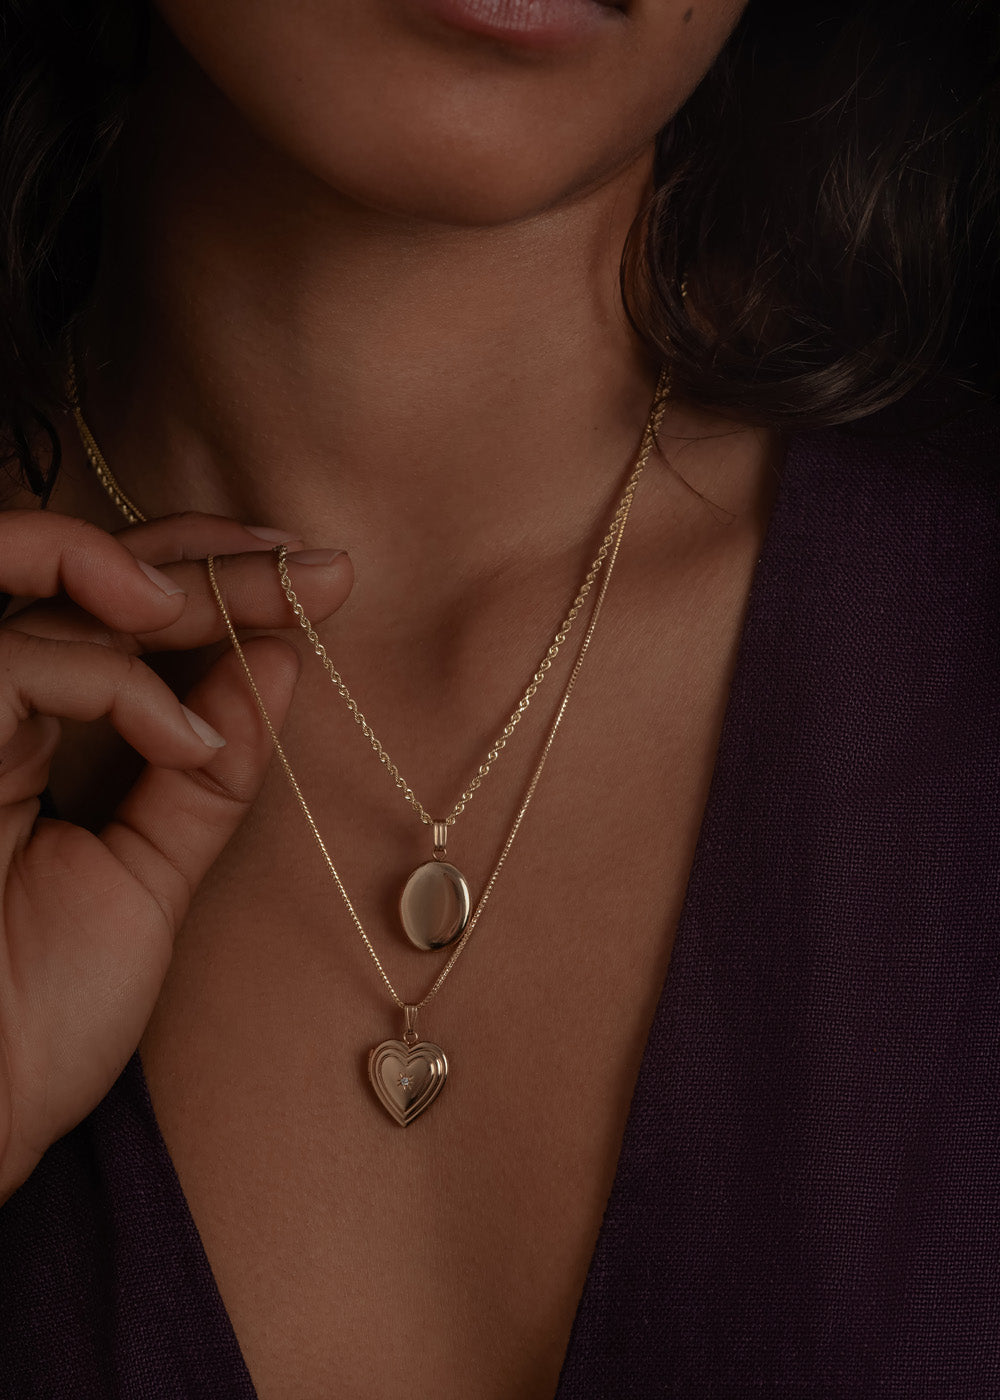 Gorjana Kara Padlock Charm Necklace - Gold